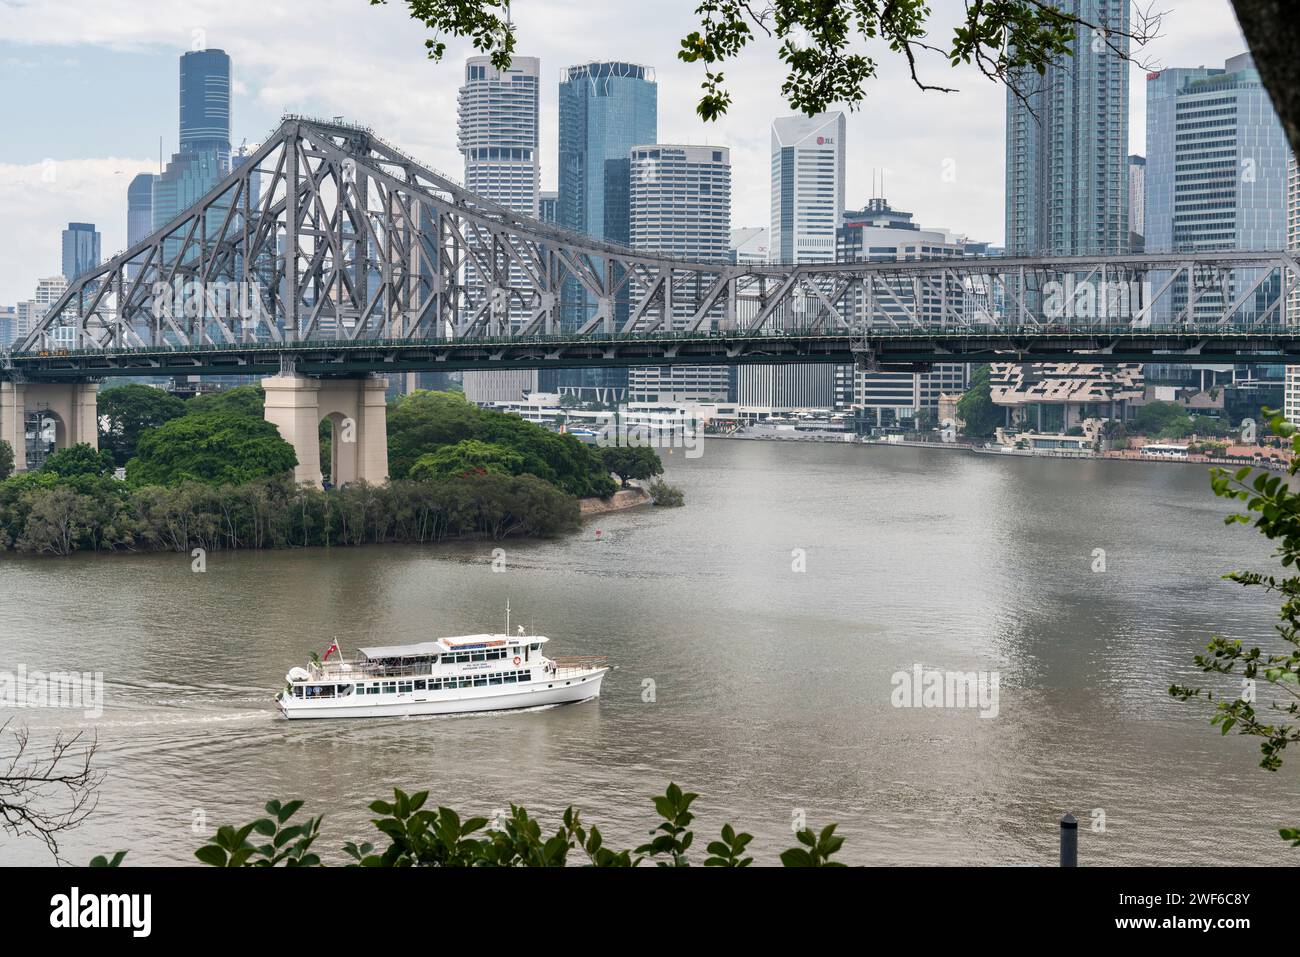 Brisbane city, the Story Bridge and the Brisbane River, Queensland, Australia Stock Photo